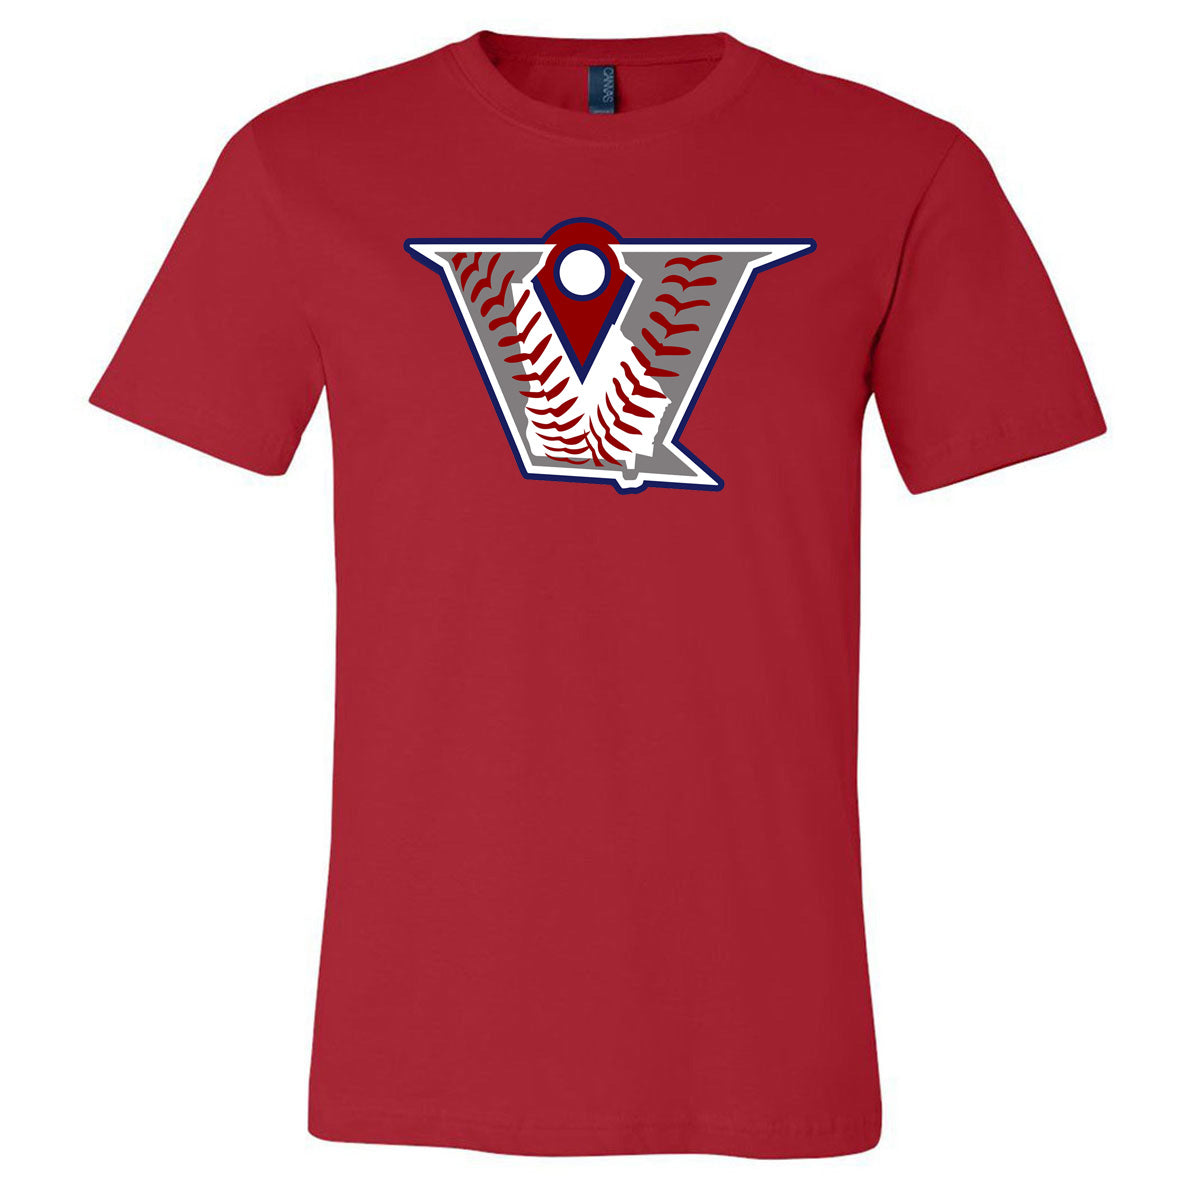 Velo BB - Velocity Baseball Logo - Red Tee - Southern Grace Creations